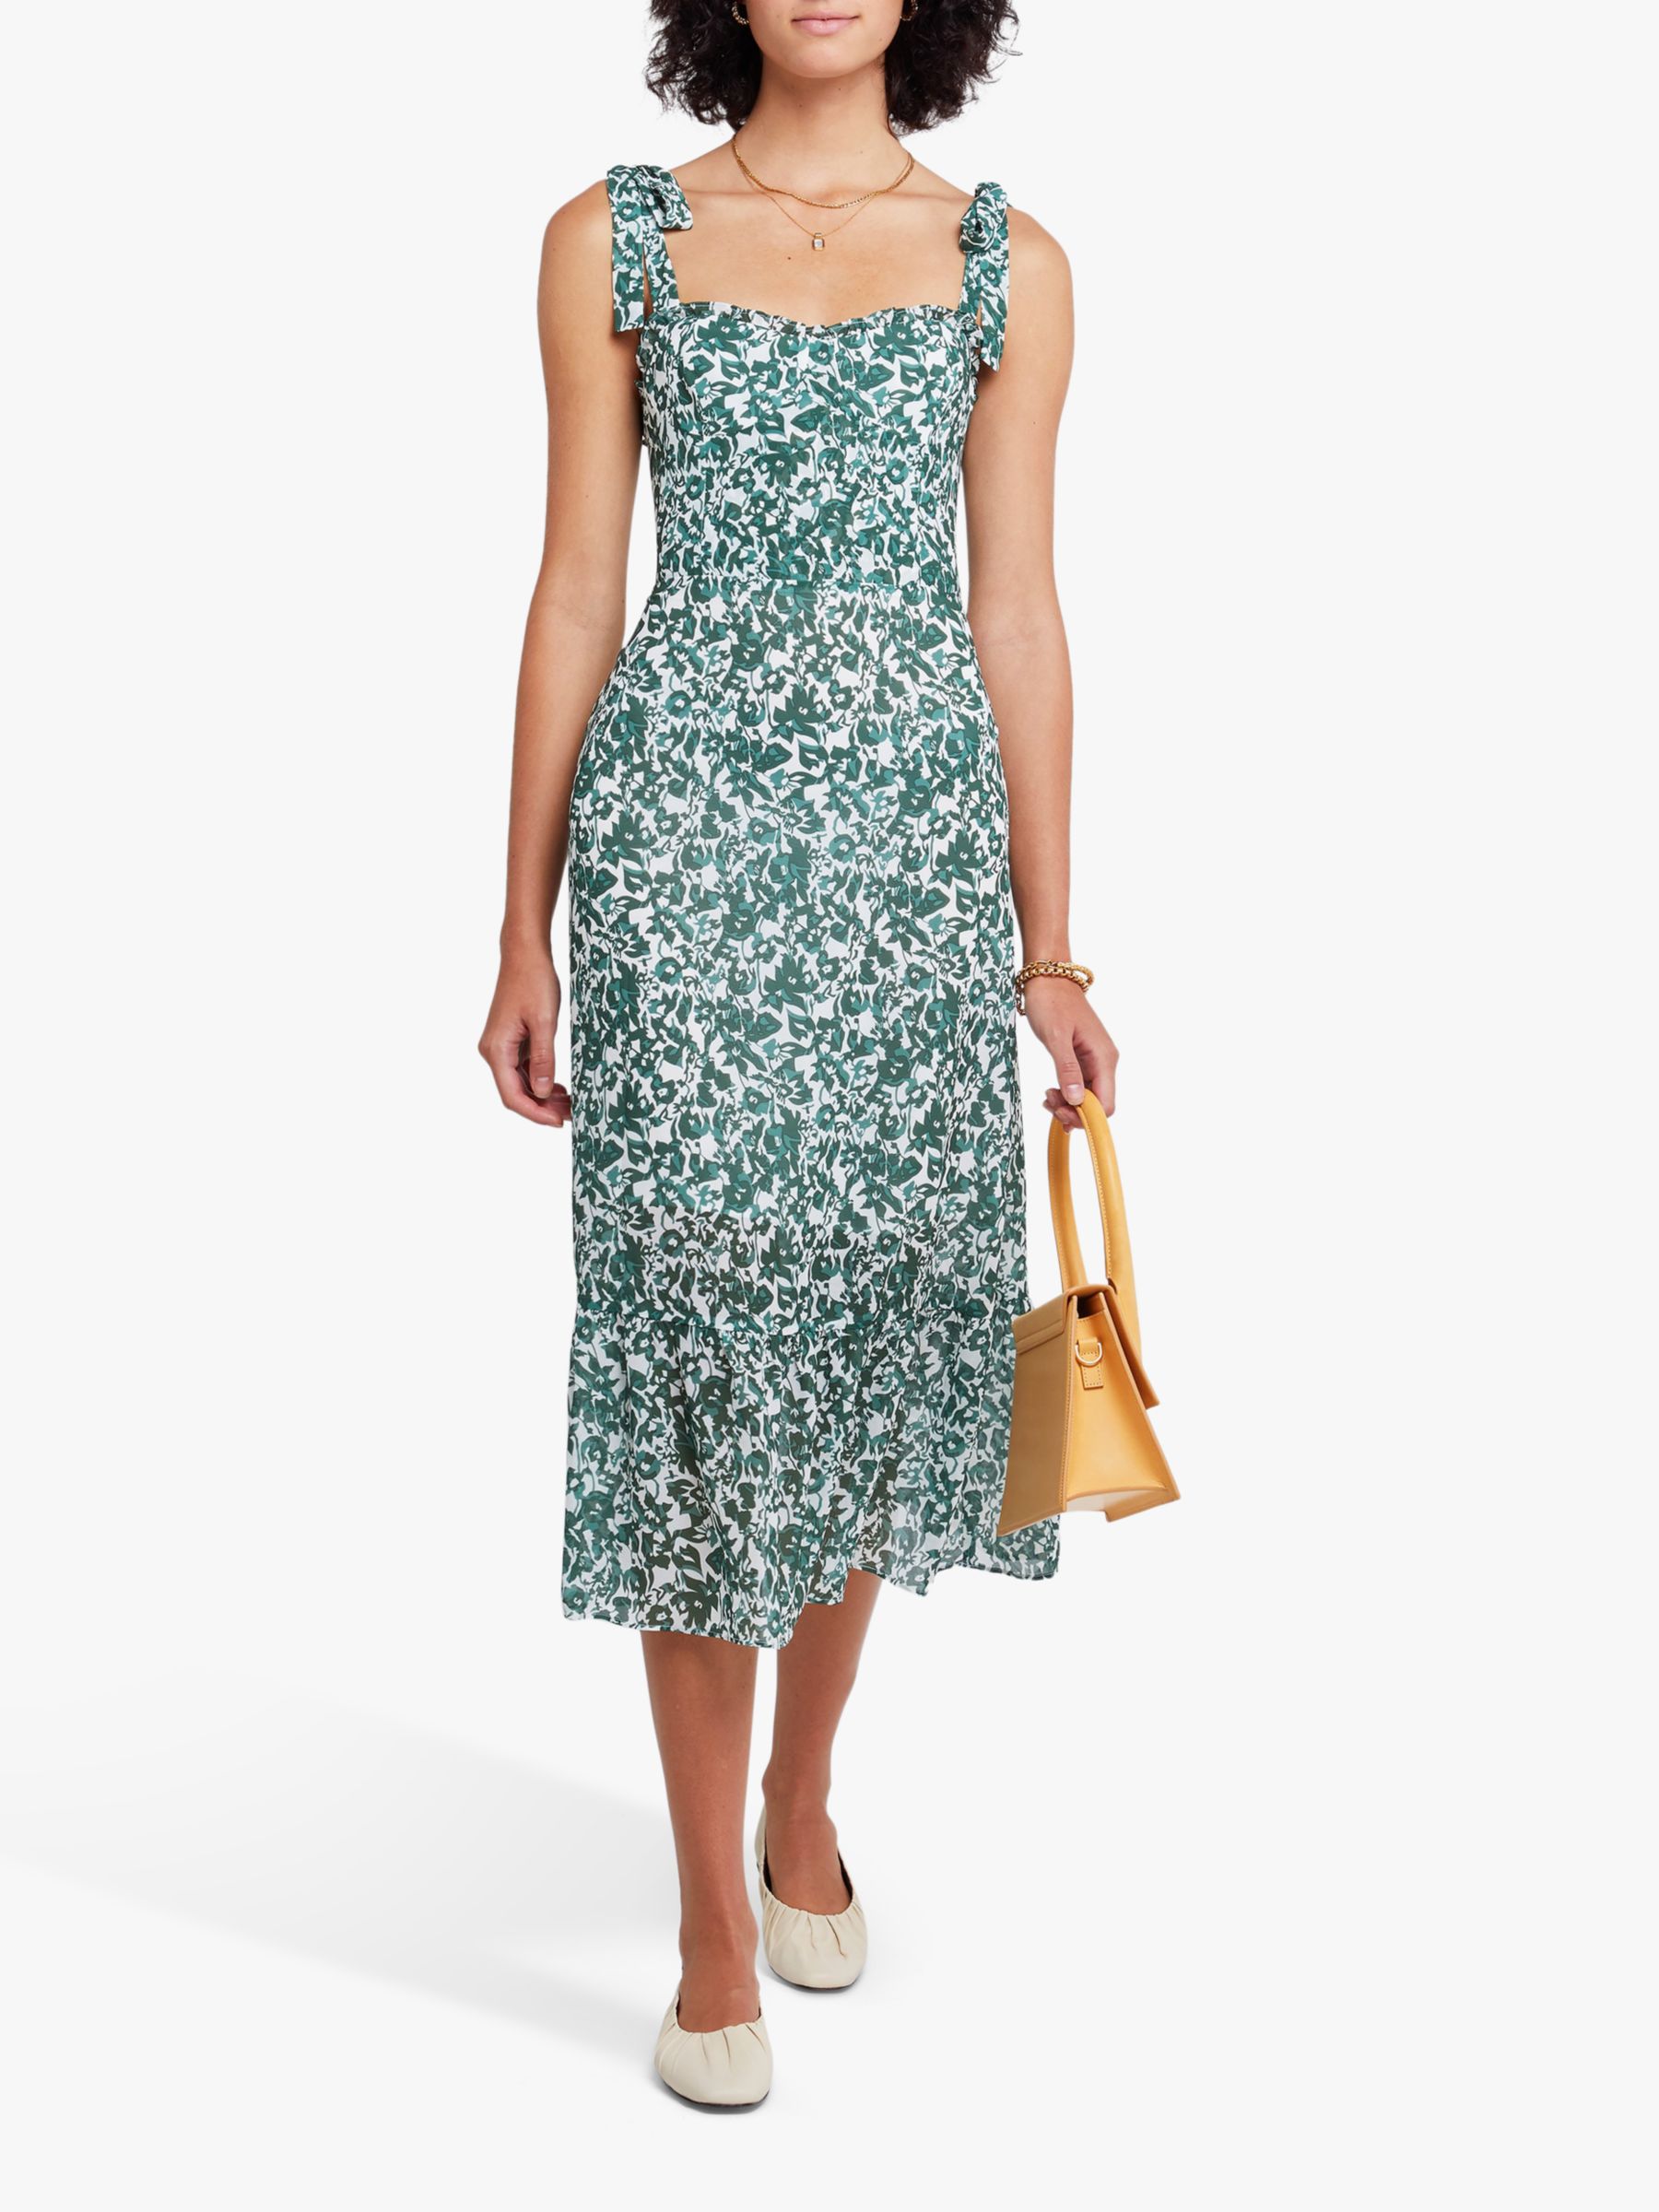 o.p.t Toile de Jouy Floral Print Sleeveless Midi Dress, Green, 8